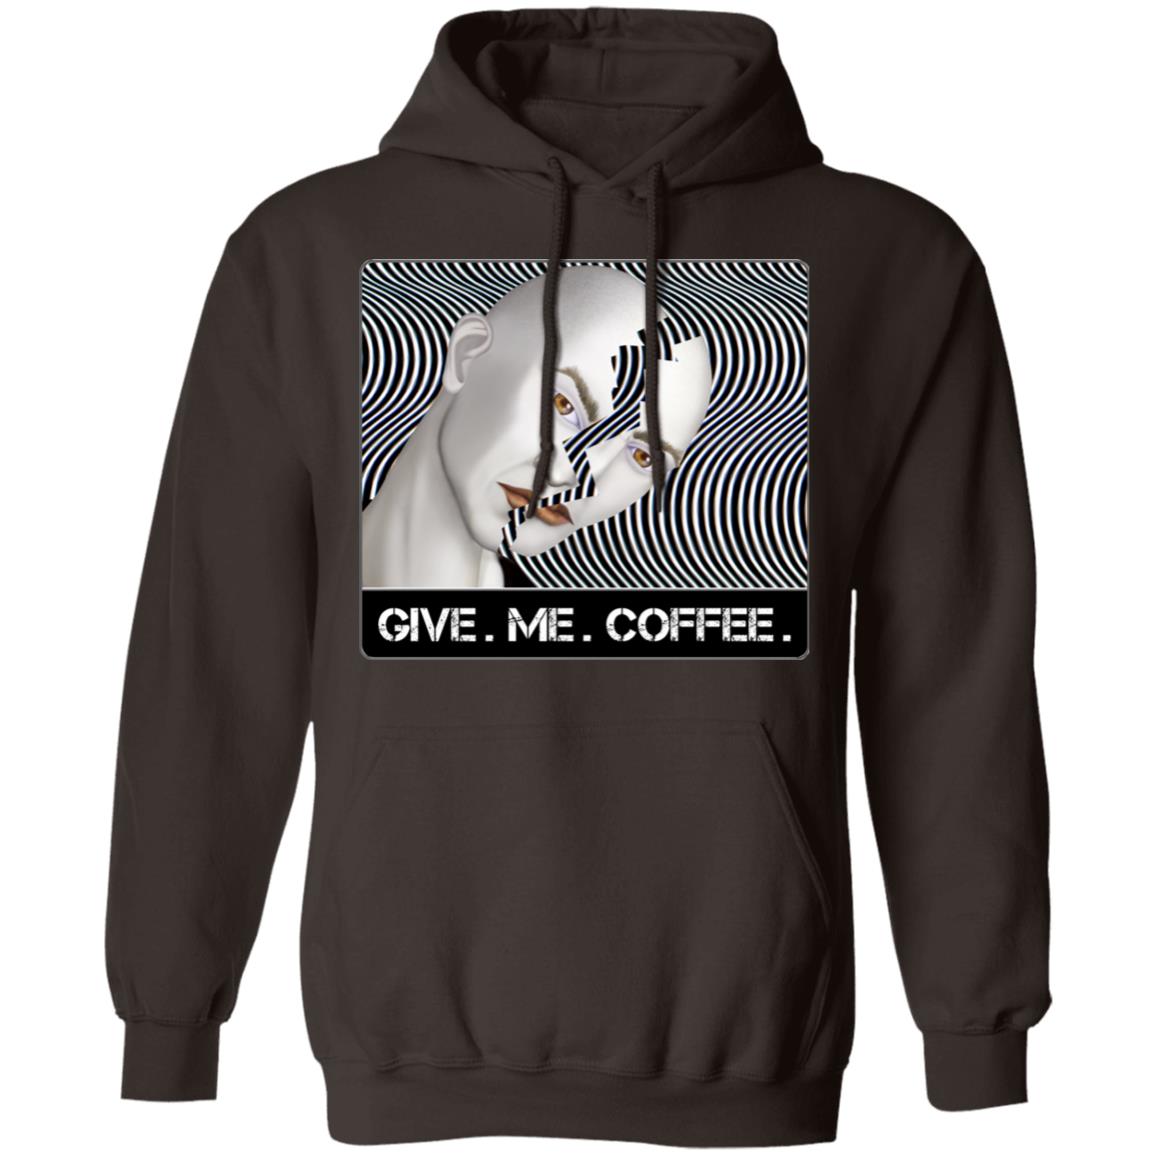 GIVE. ME. COFFEE. - Adult Hoodie